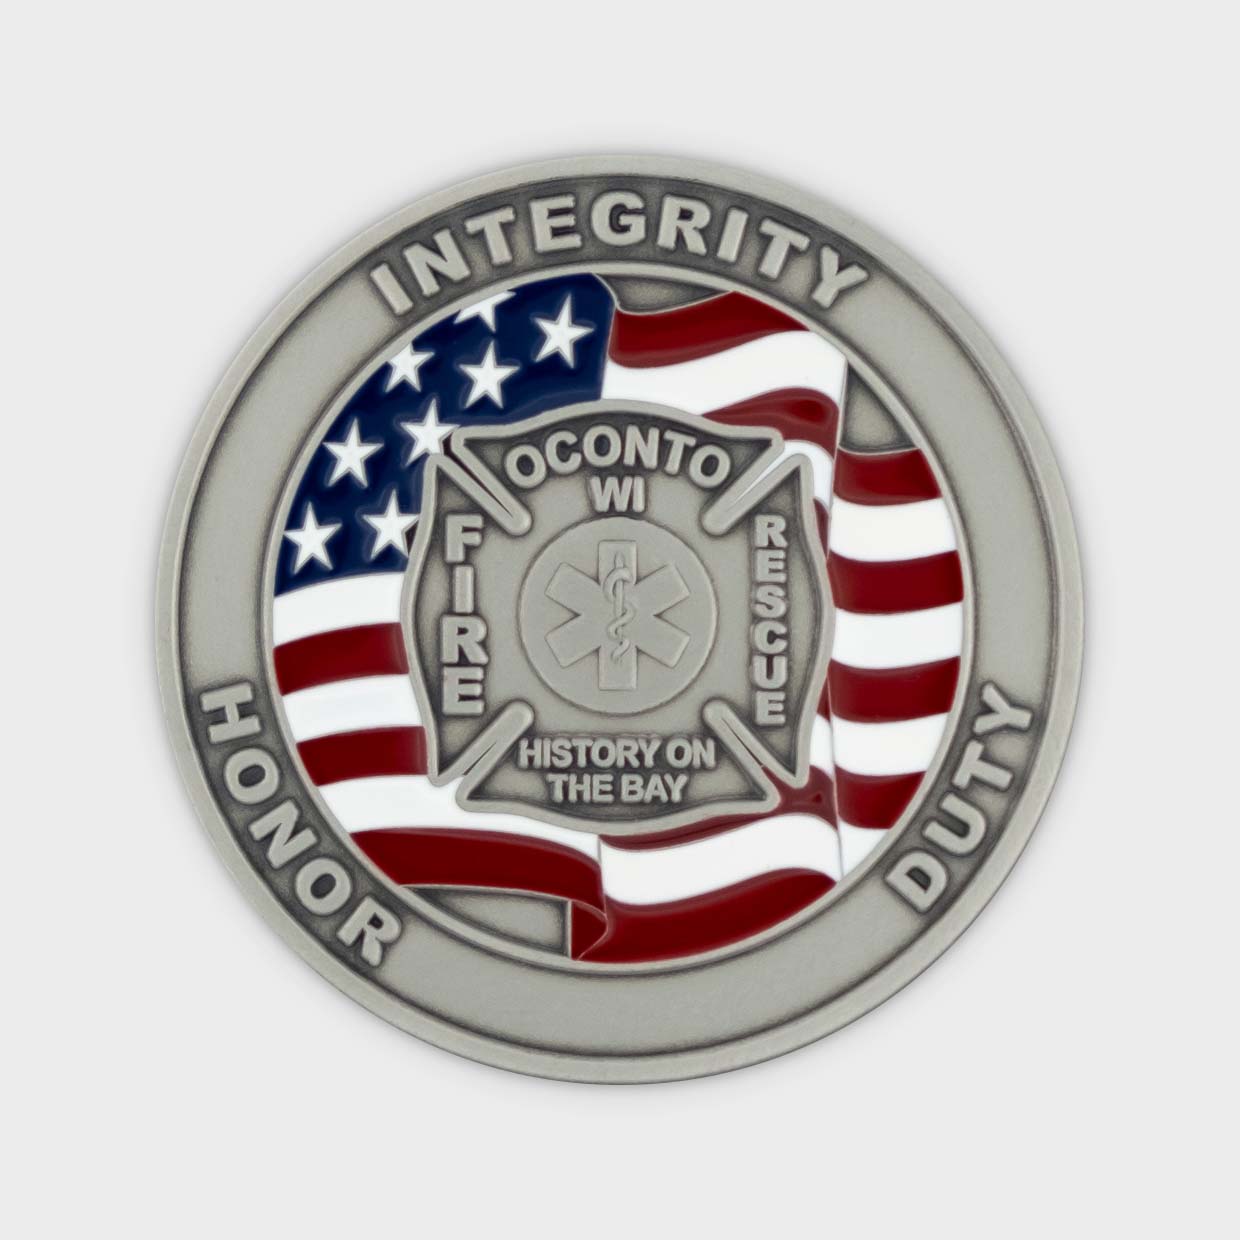 Oconto Fire Rescue Coin Obverse